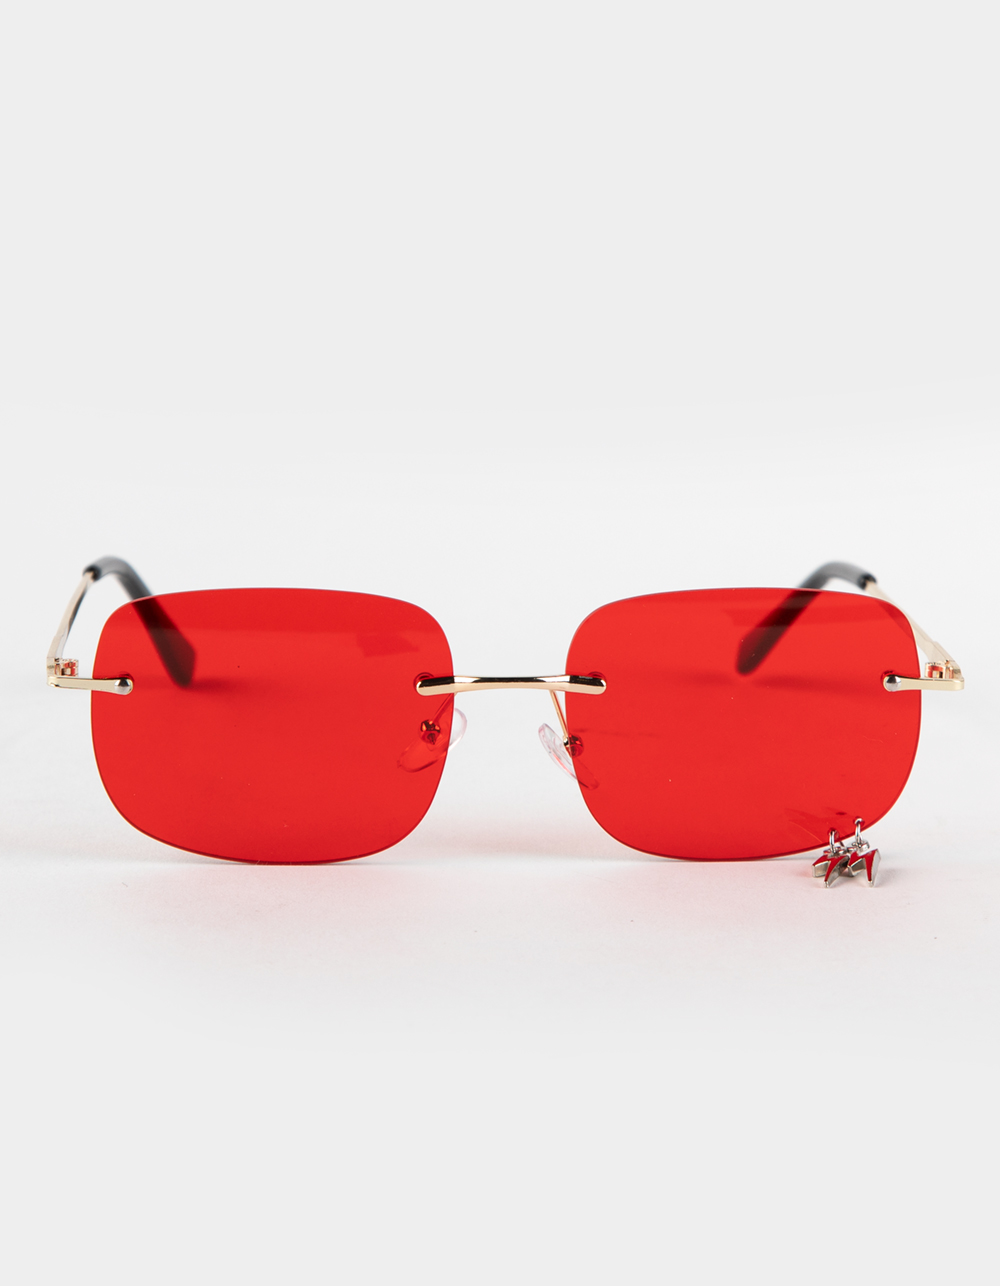 Frameless Transparent Sunglasses Square Glasses Fashion Sunscreen